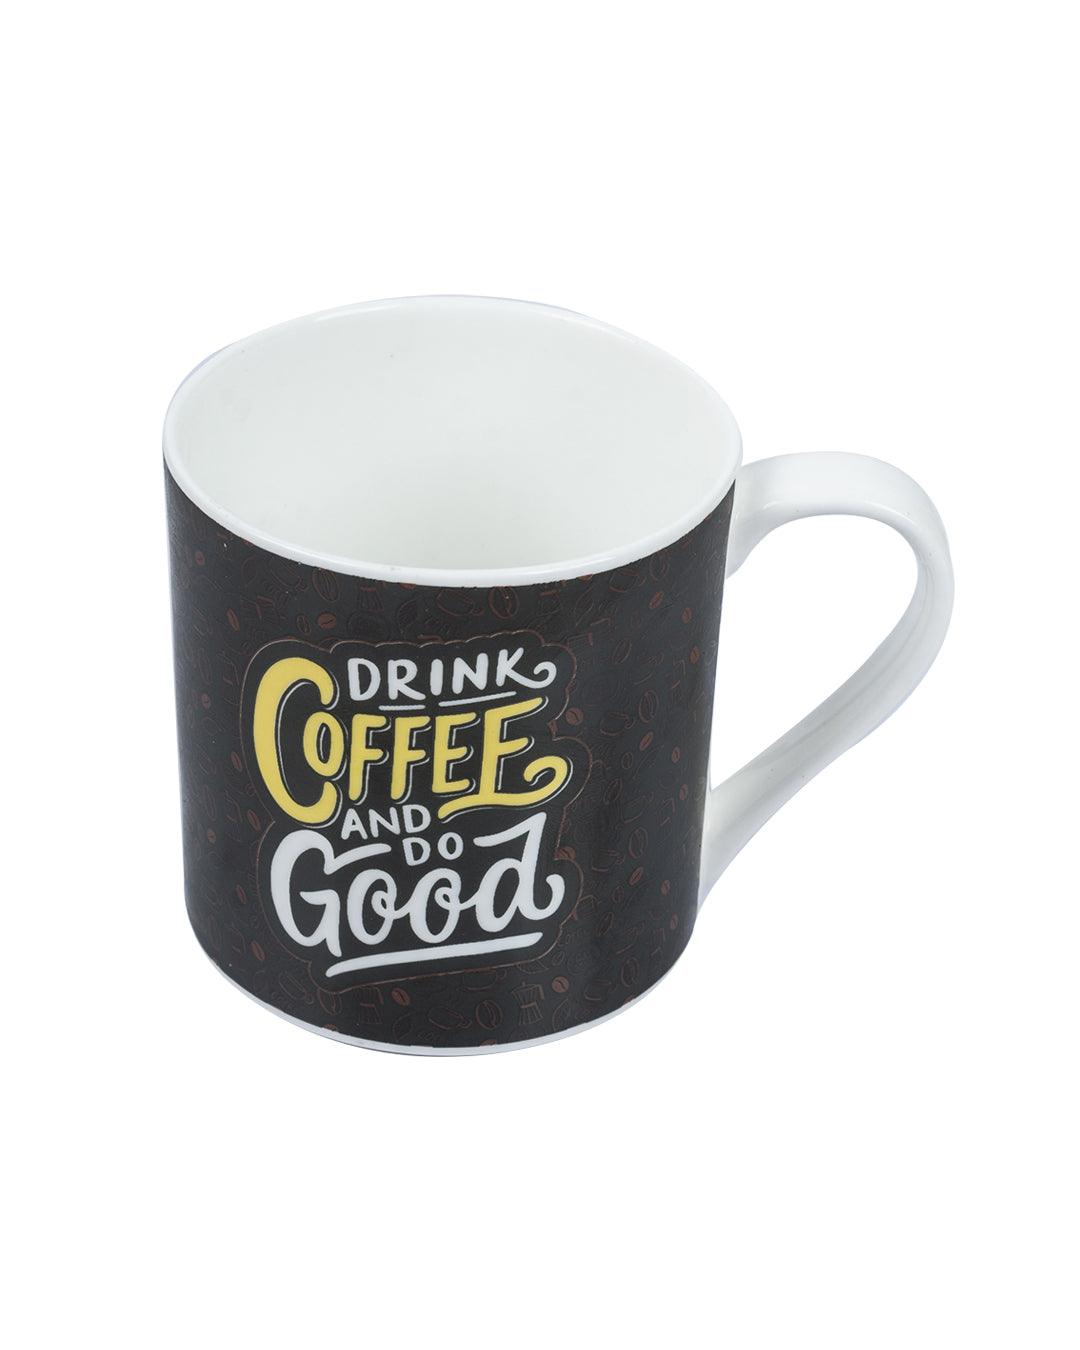 'DRINK COFFEE AND DO GOOD' graphic print Ceramic Milk, Tea & Coffee Mugs (Set Of 2, 340 mL) - MARKET 99